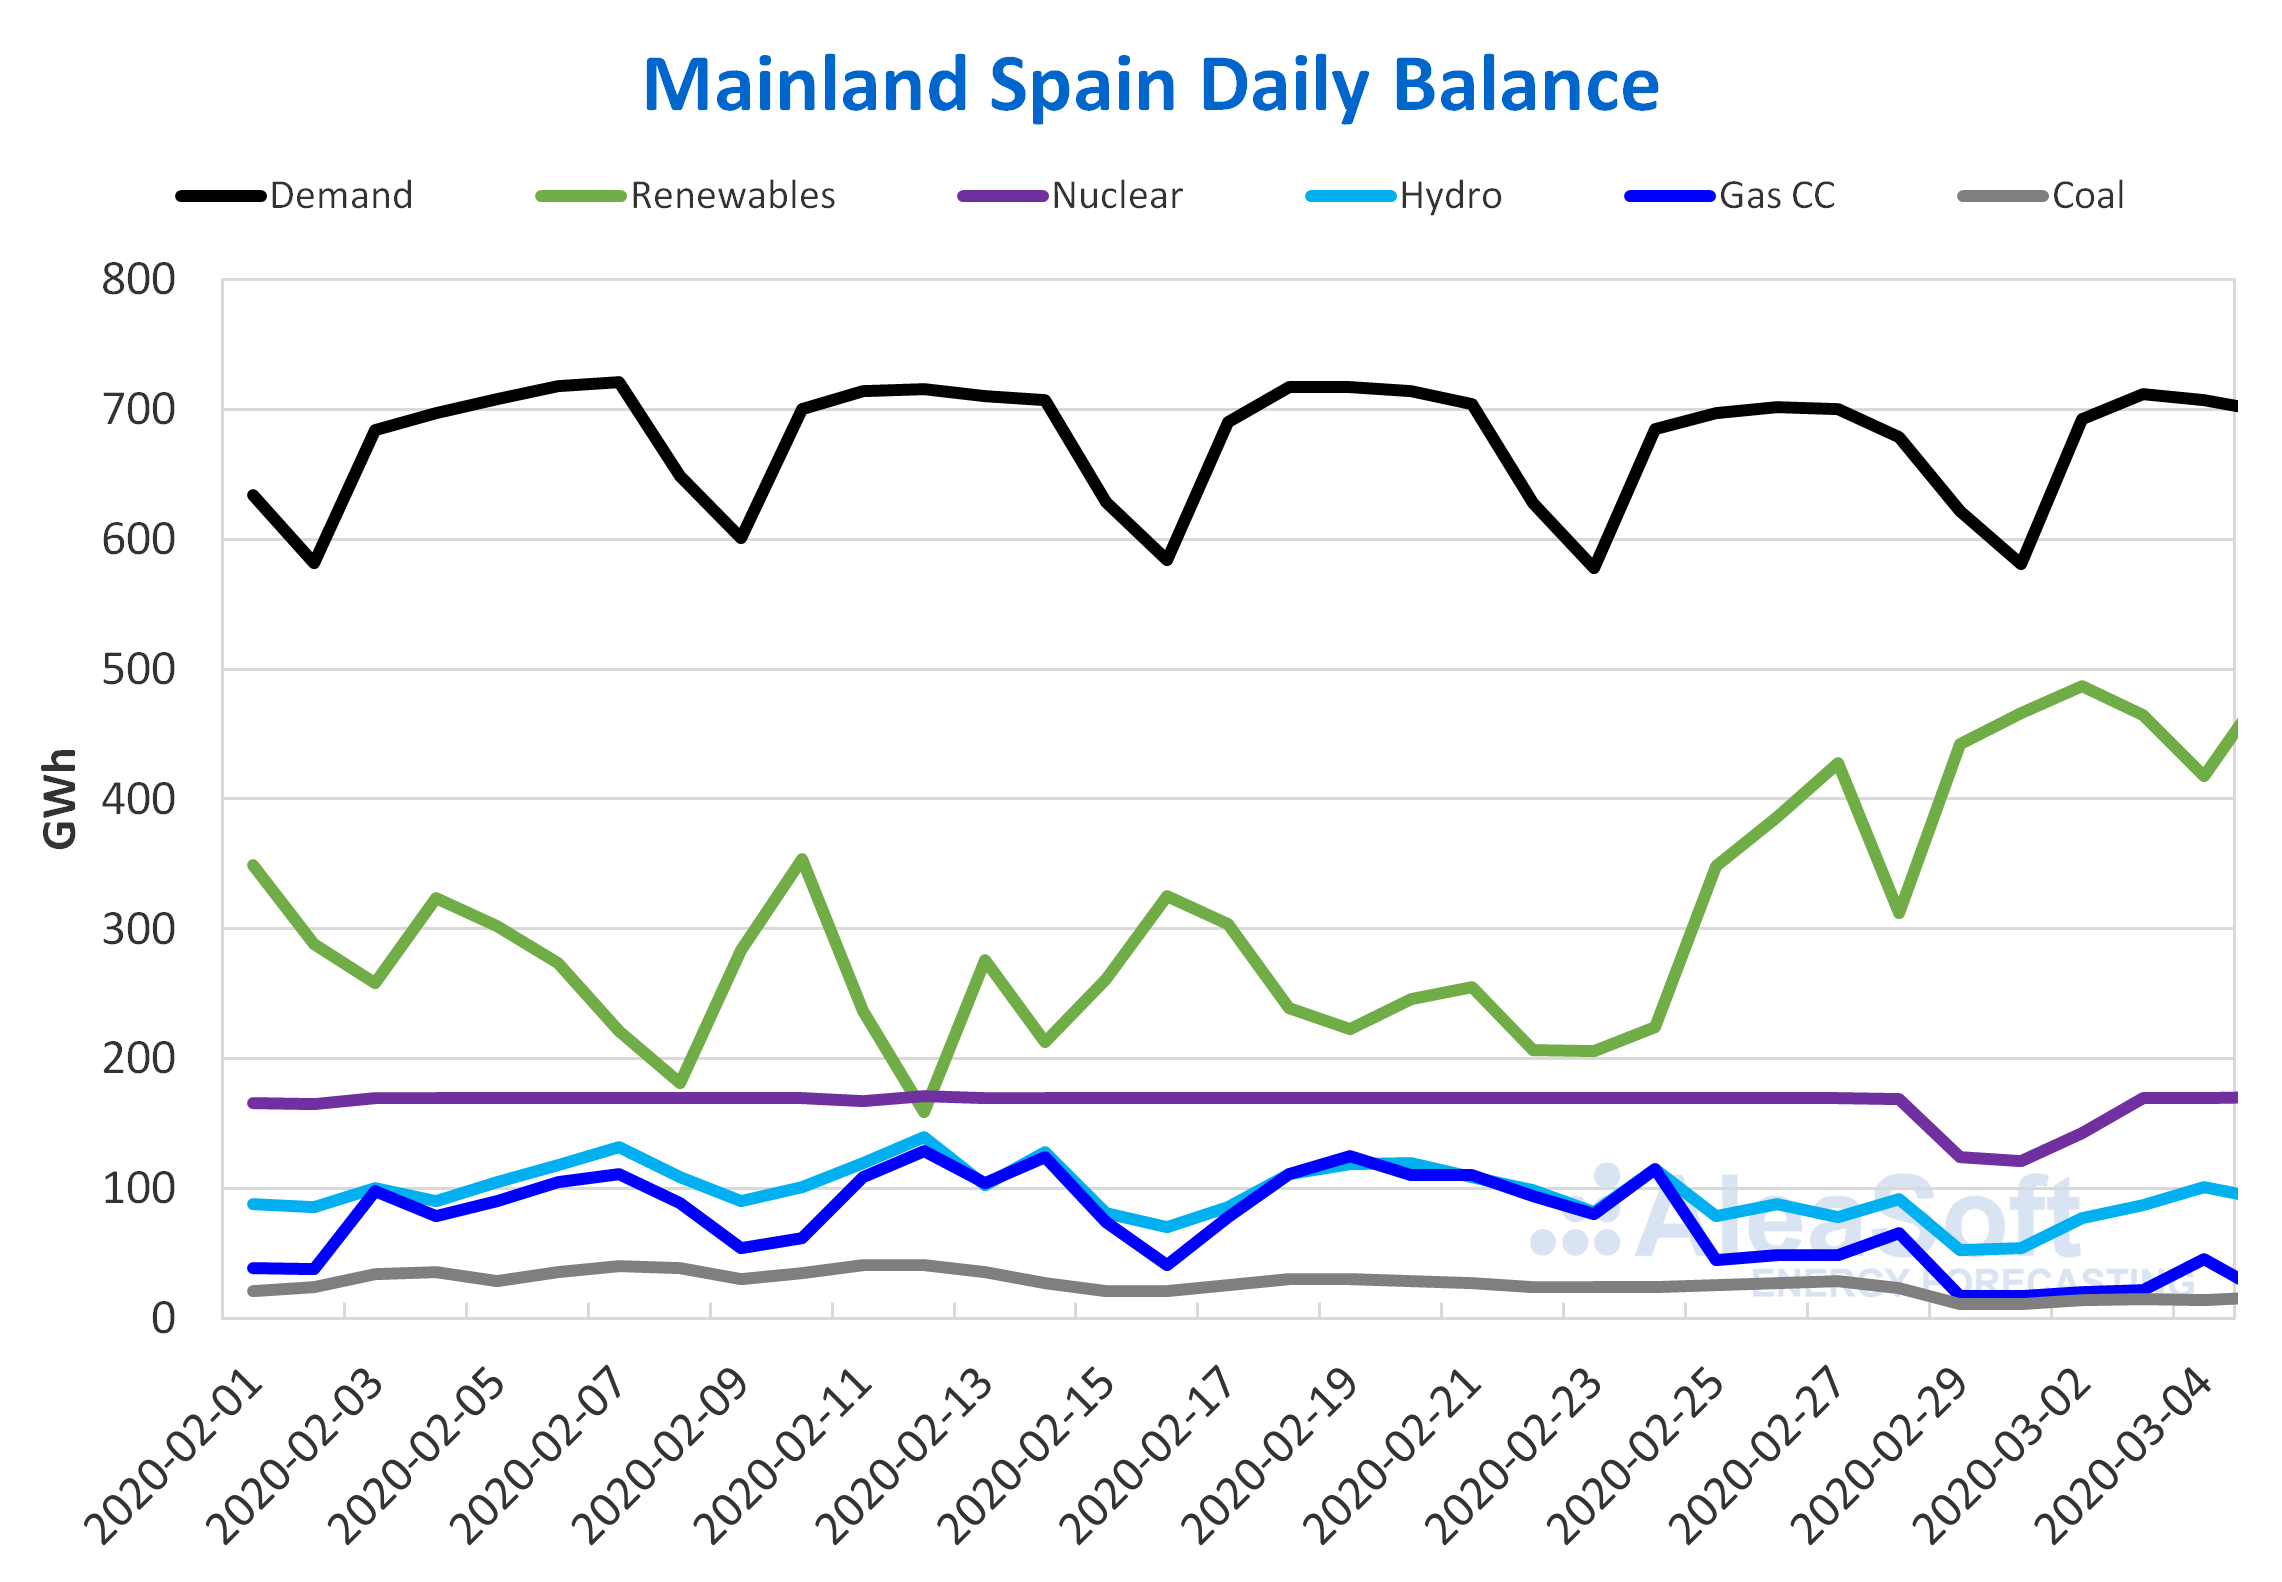 AleaSoft - Daily balance electricity Spain demand production